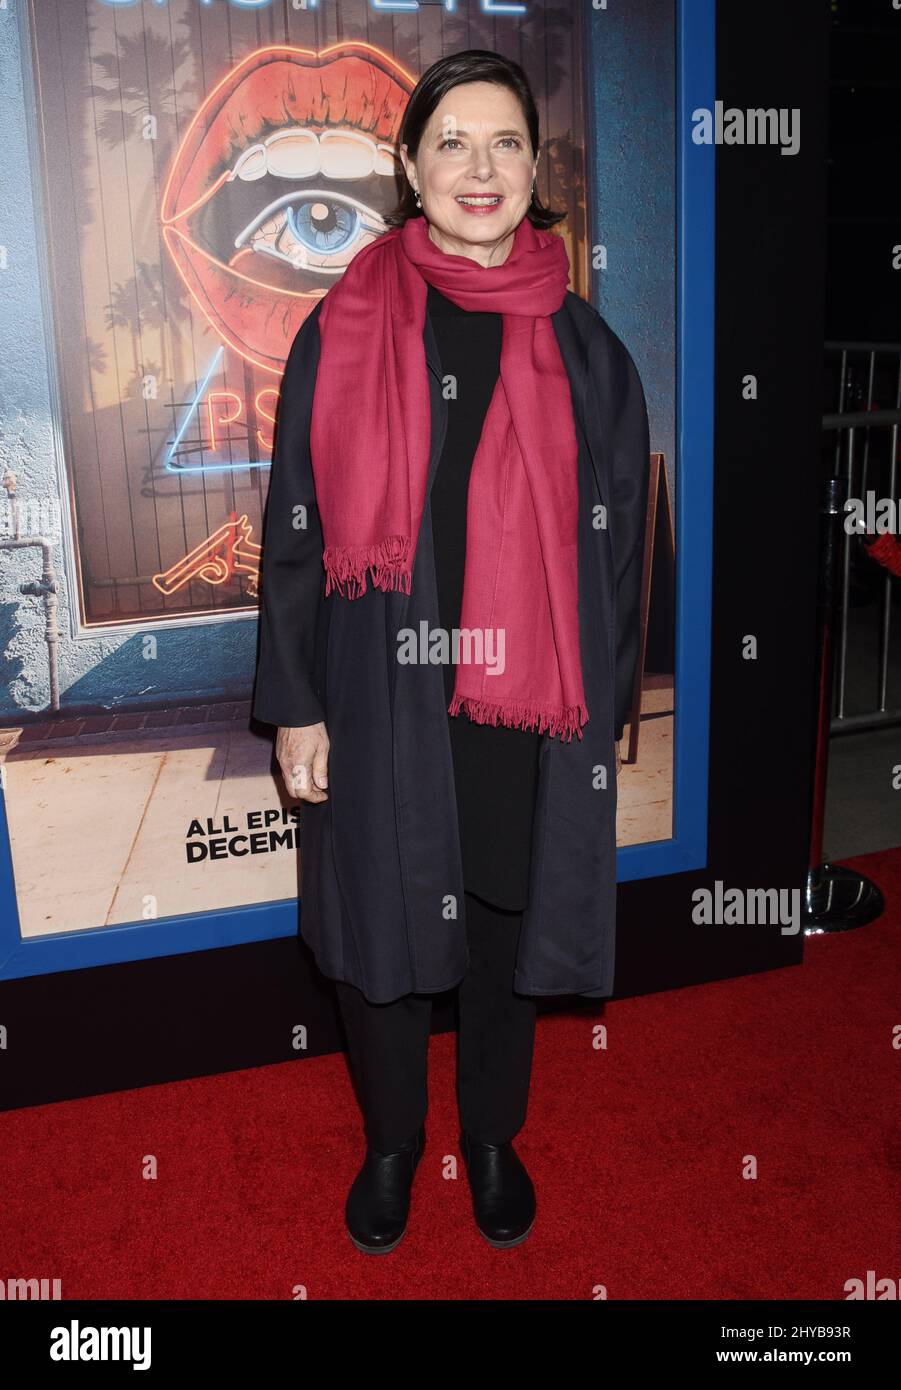 Isabella Rossellini attending the Hulu Original Series 